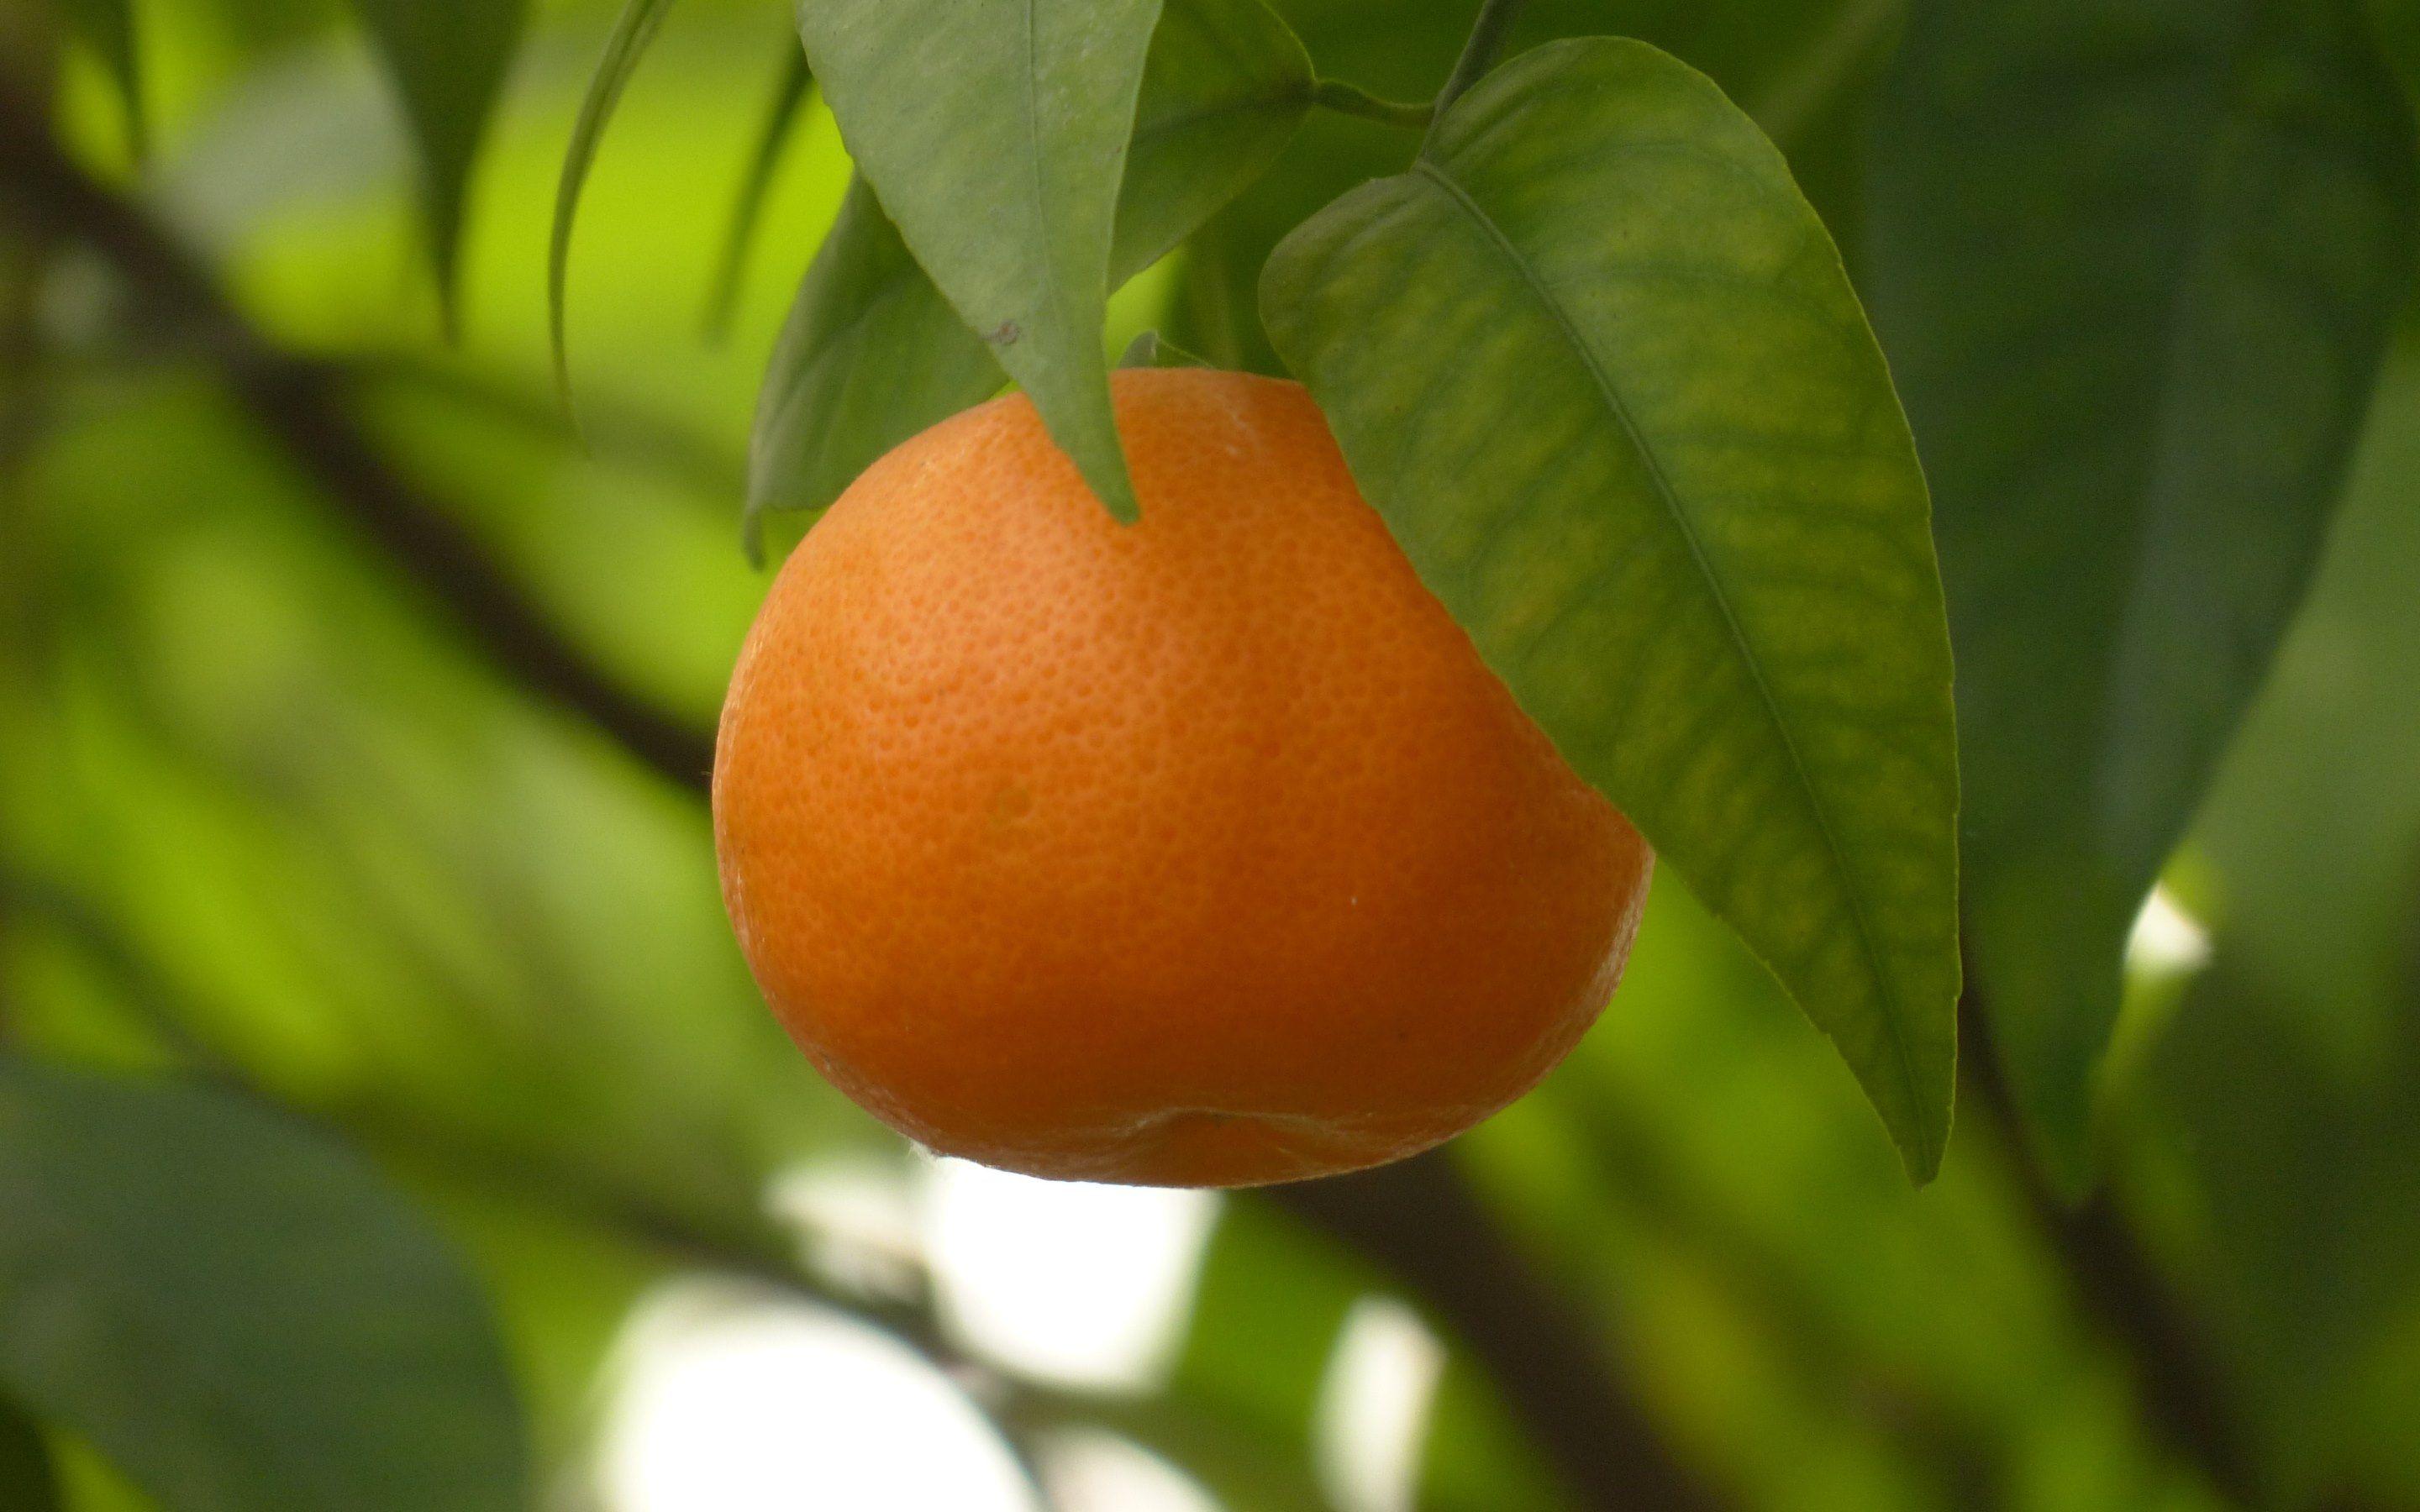 Mandarin Oranges Wallpaper Archives.com